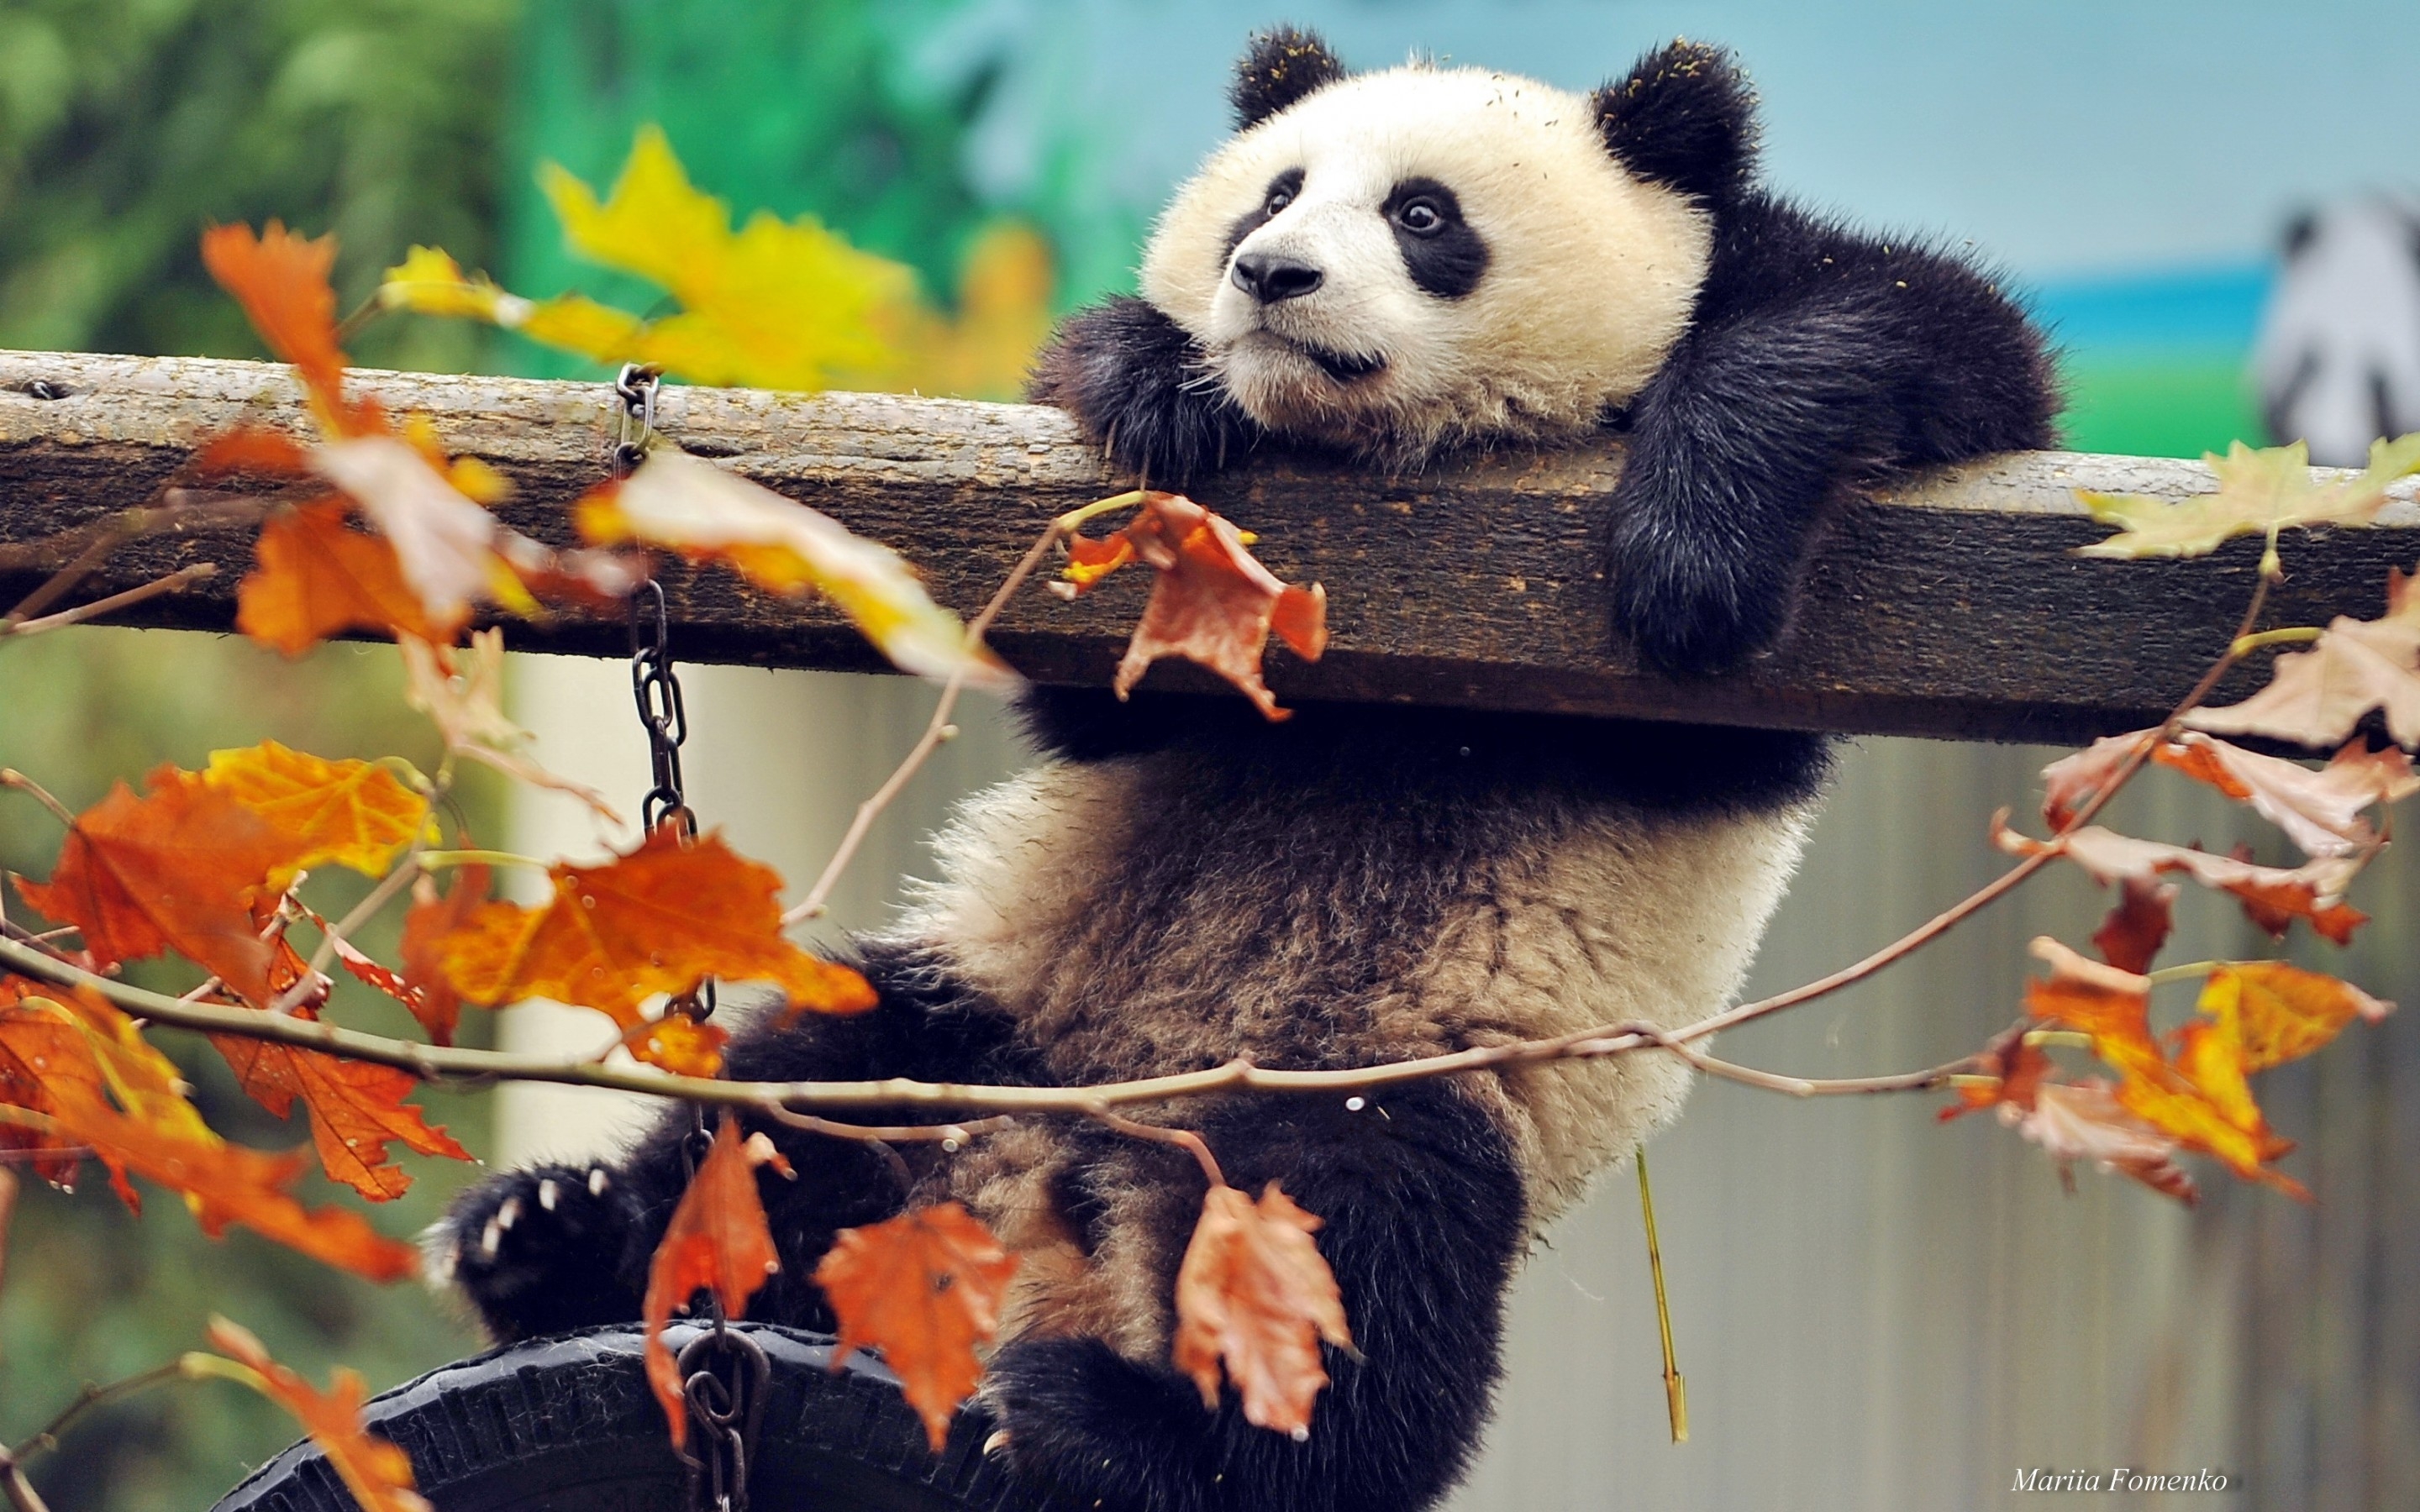 Cute Panda Climbing for 2880 x 1800 Retina Display resolution